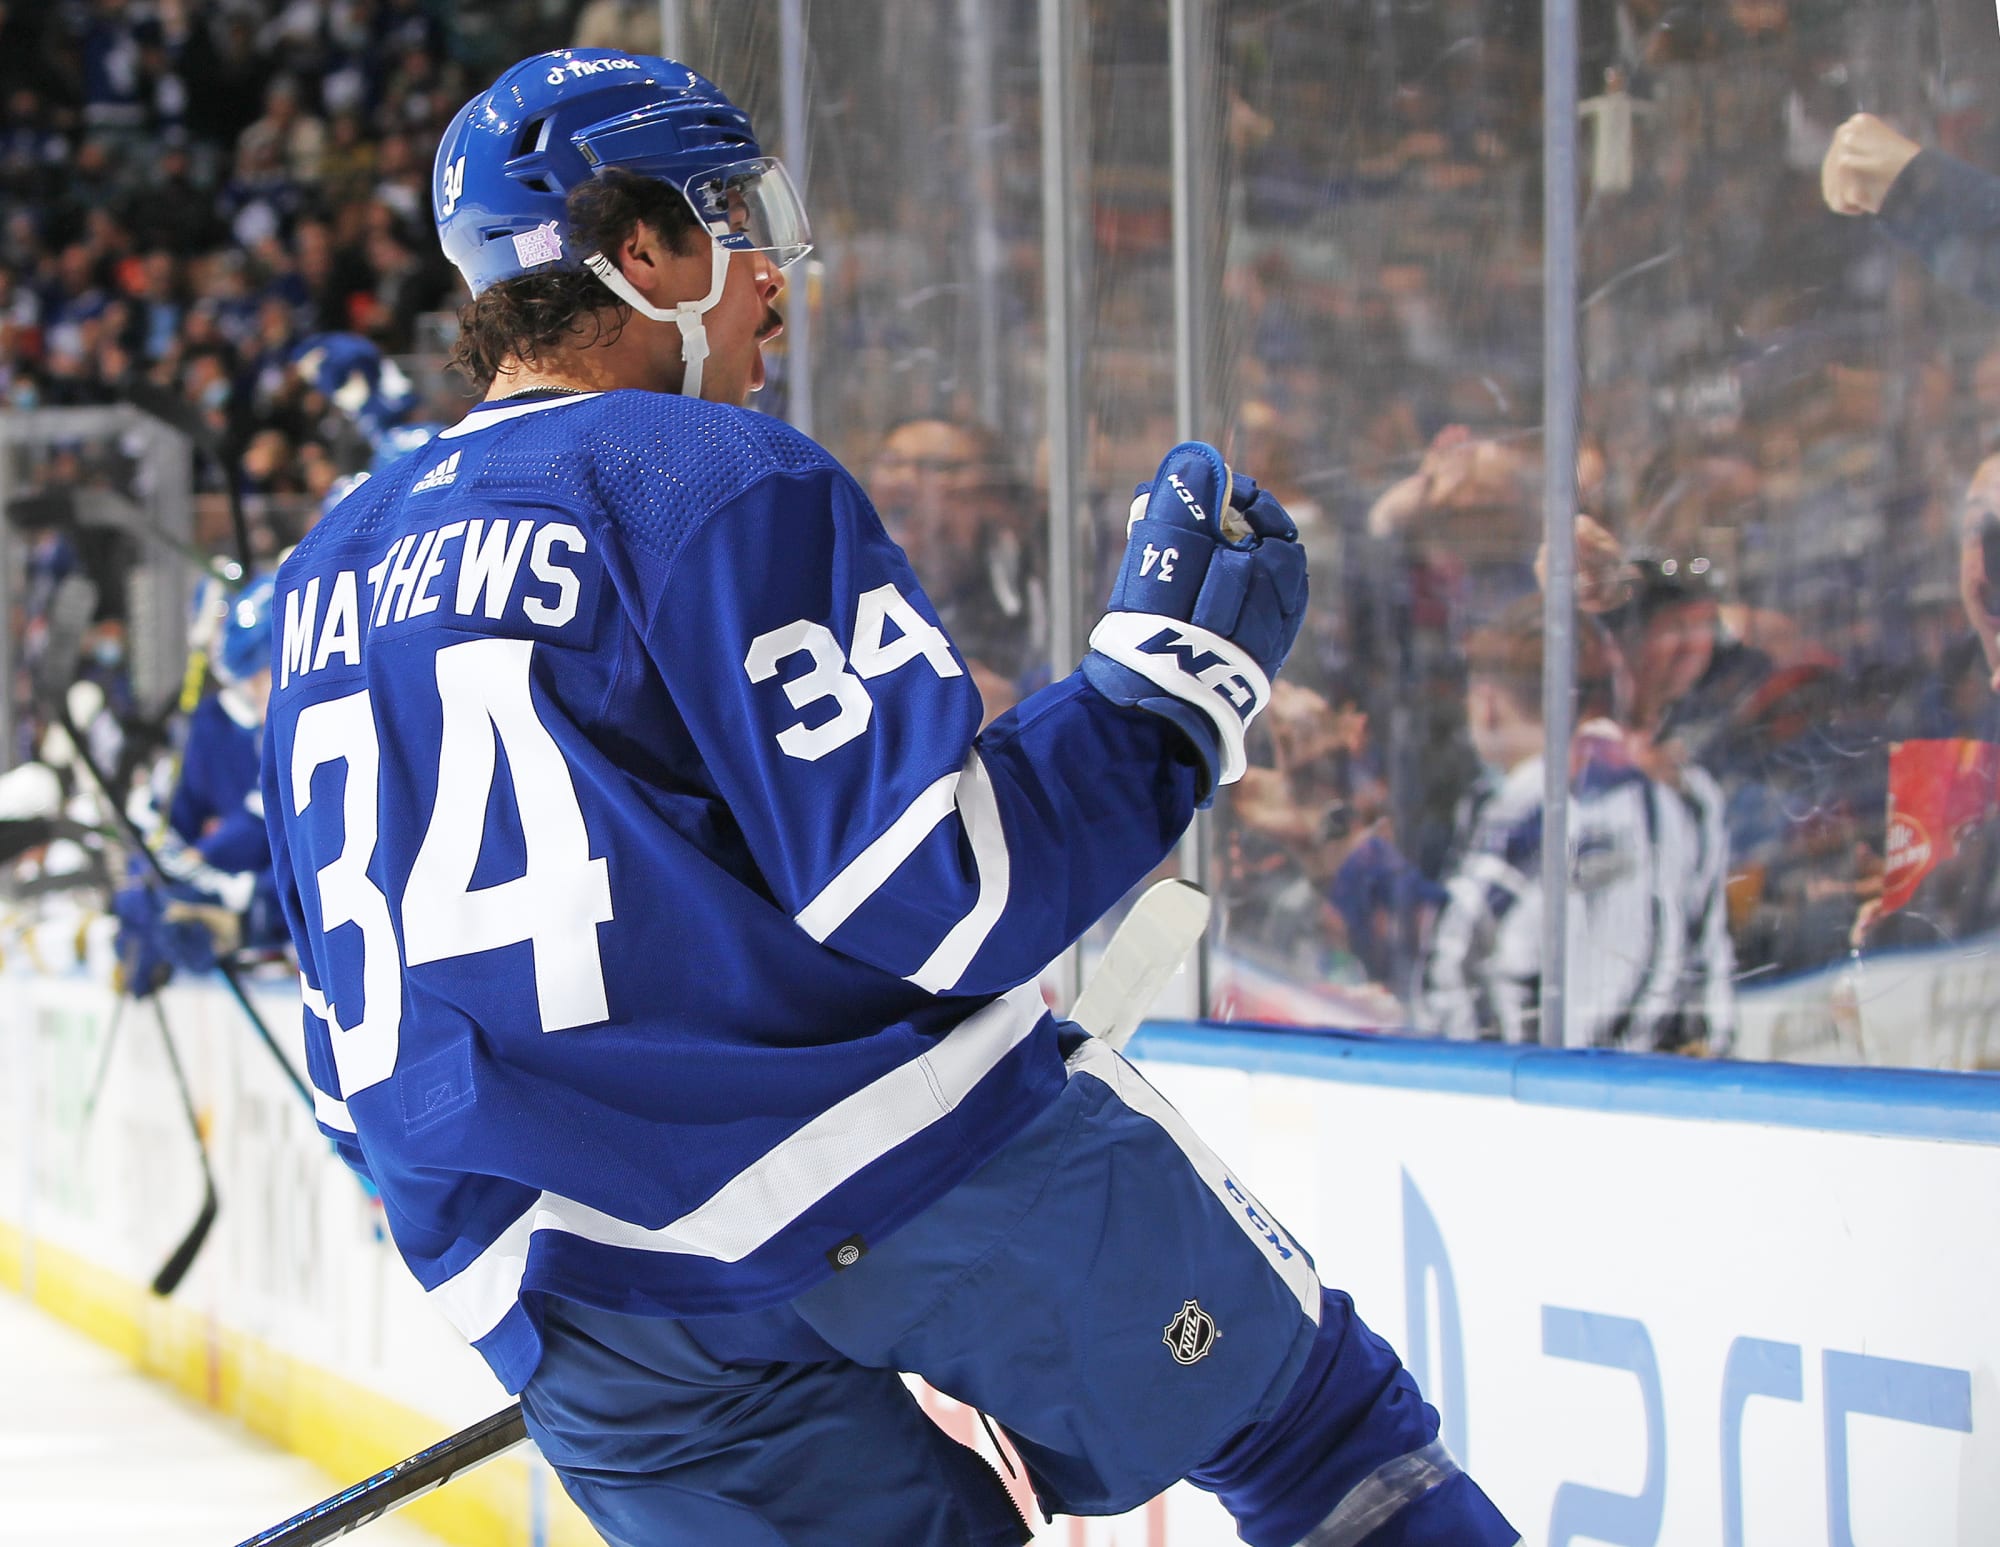 Toronto Maple Leafs: Auston Matthews' push for 50 goals in good shape